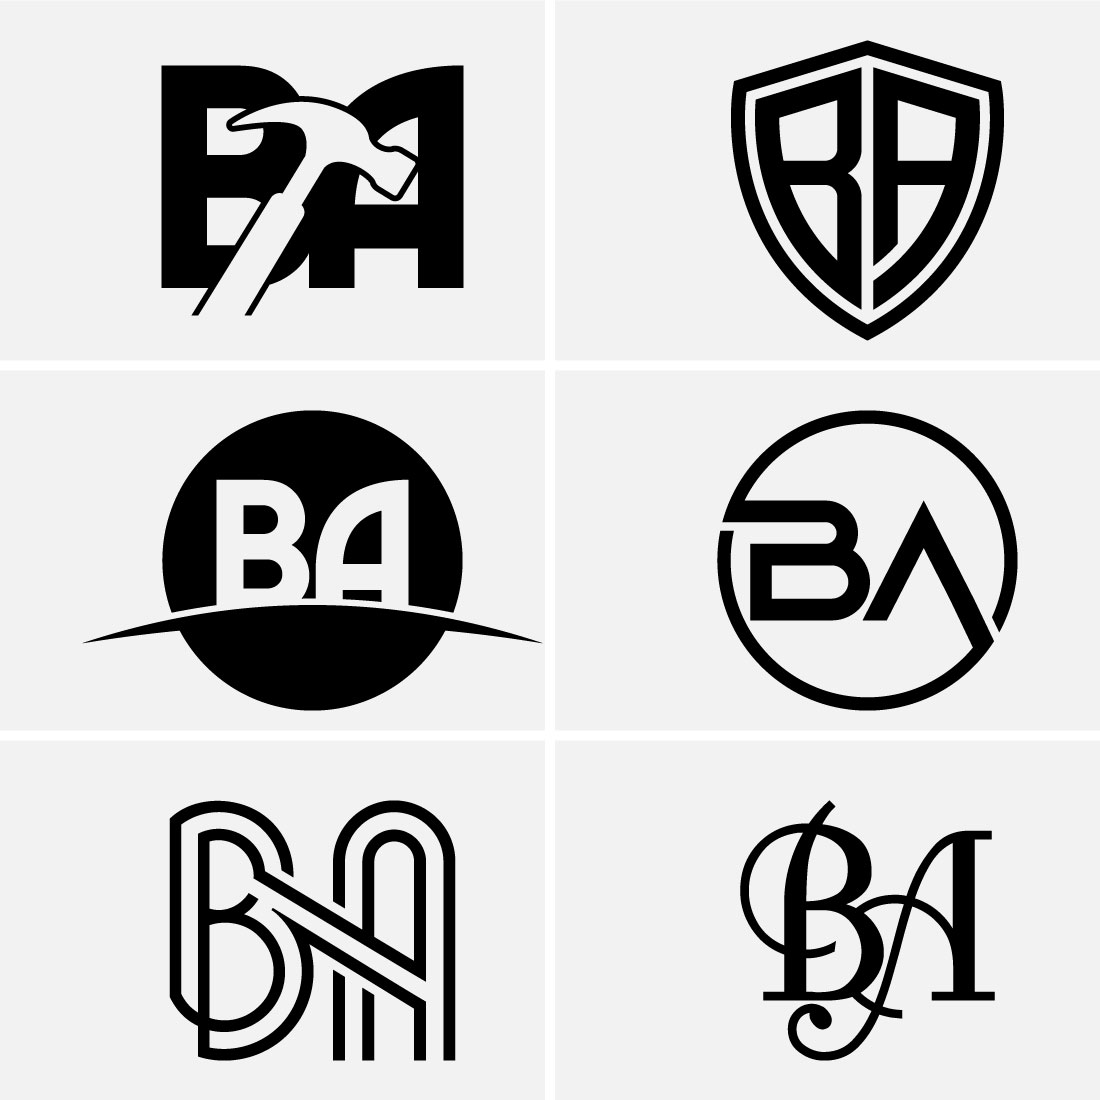 Ba logo monogram with emblem shield style design Vector Image